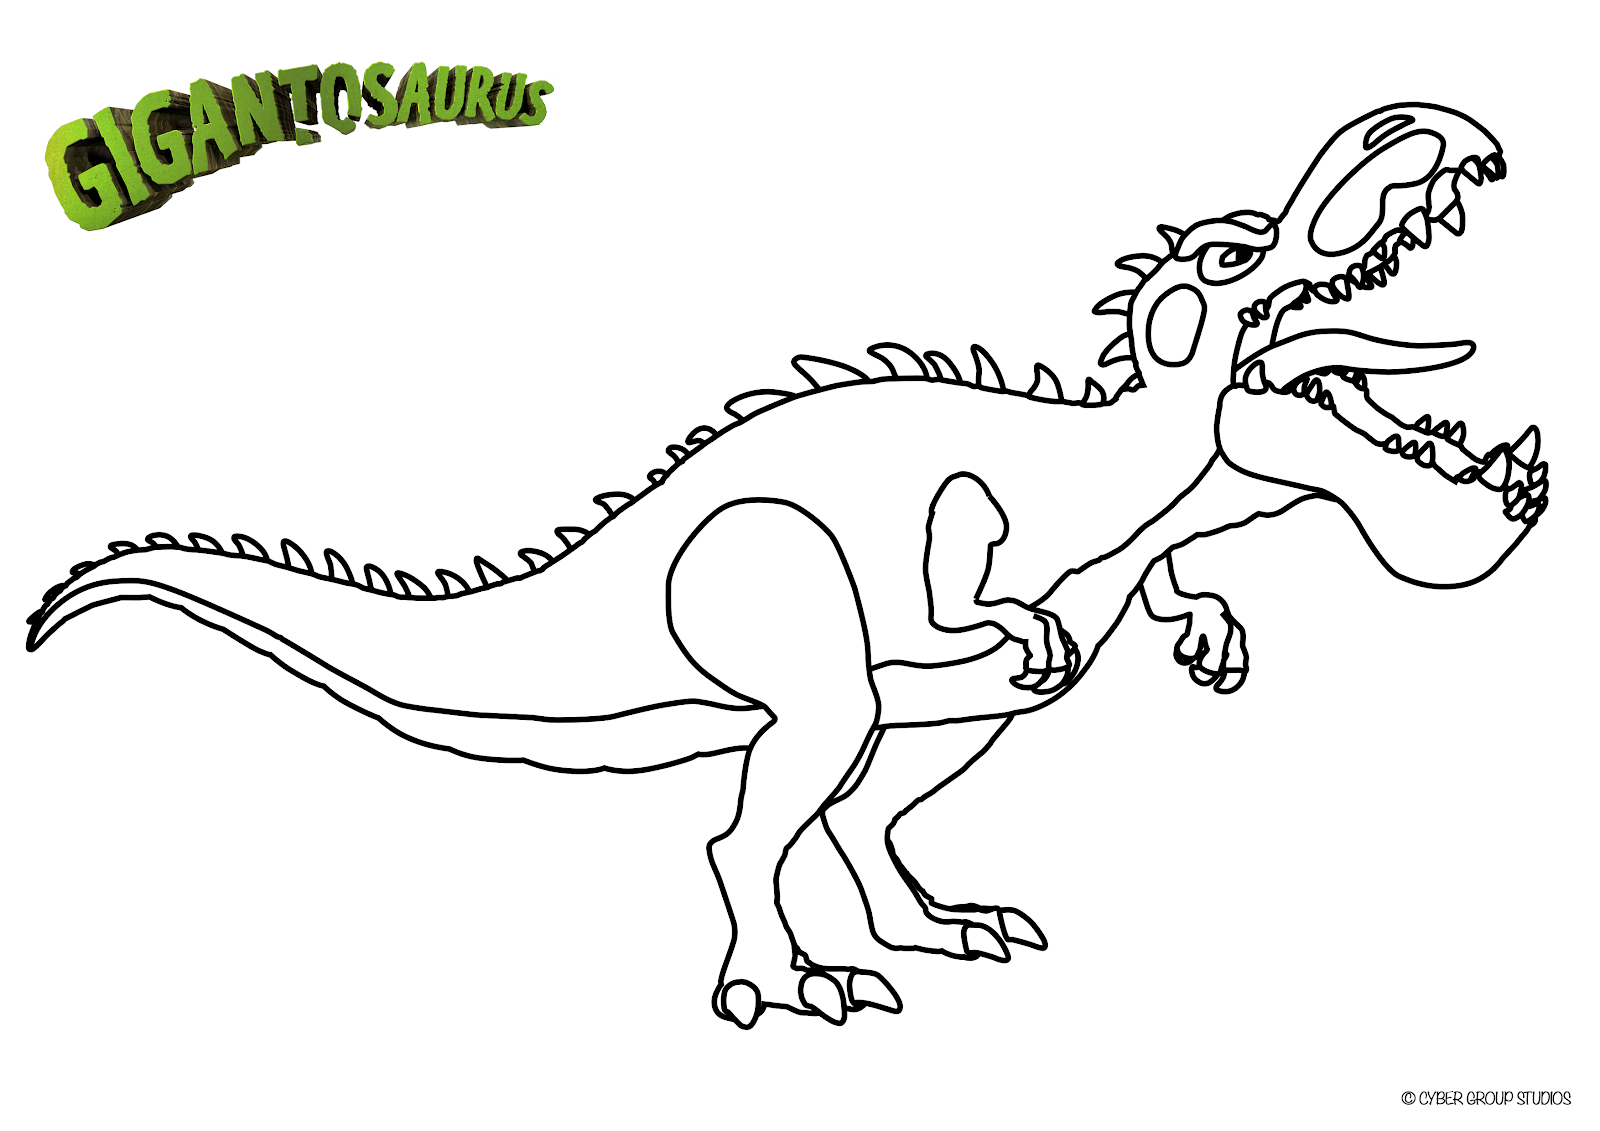 Gigantosaurus on disney junior free printables cartoon coloring pages disney coloring pages coloring pages